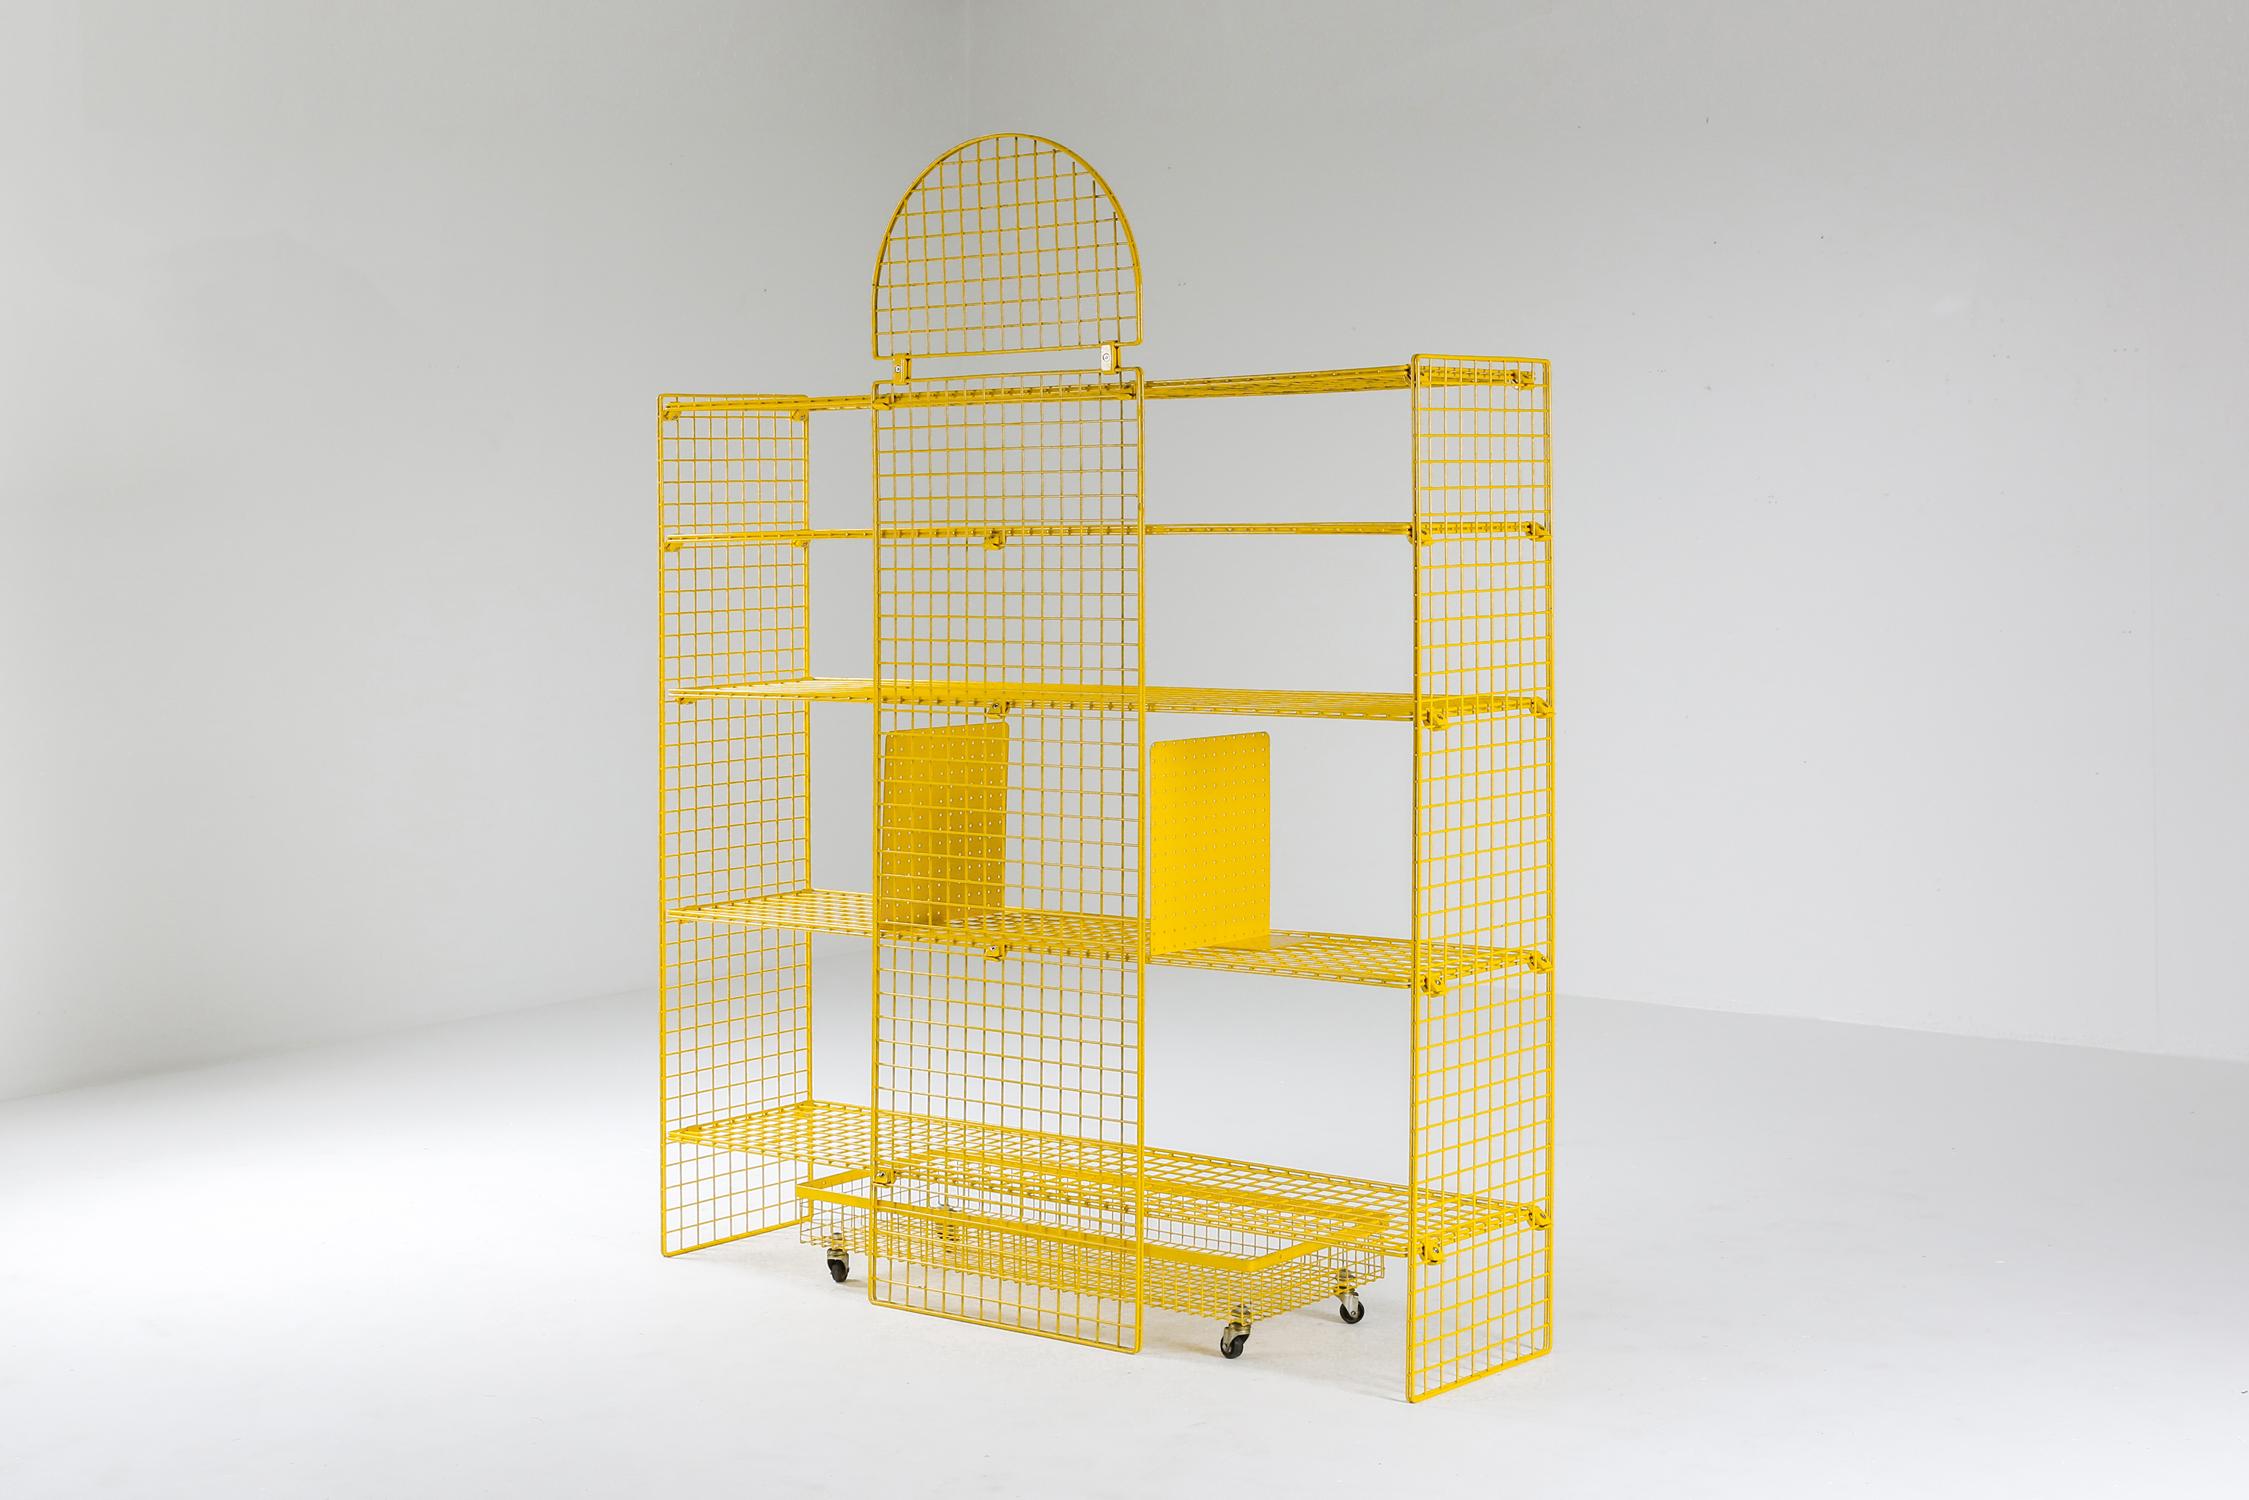 Lacquered Bieffeplast Yellow Metal Shelve System, Post-Modern Italian Design, 1970